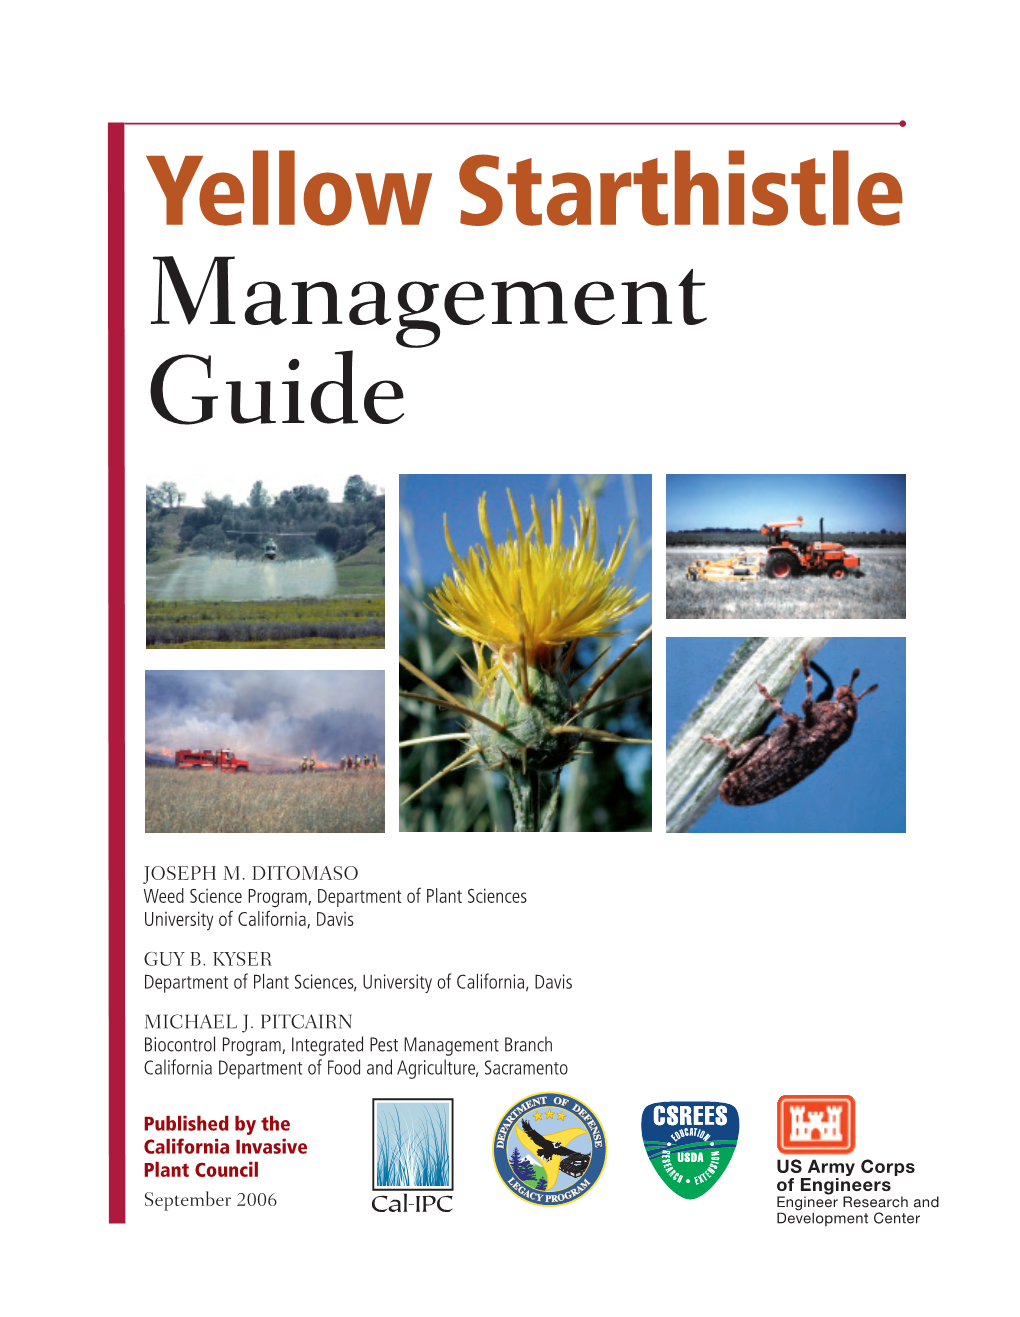 Yellow Starthistle Management Guide